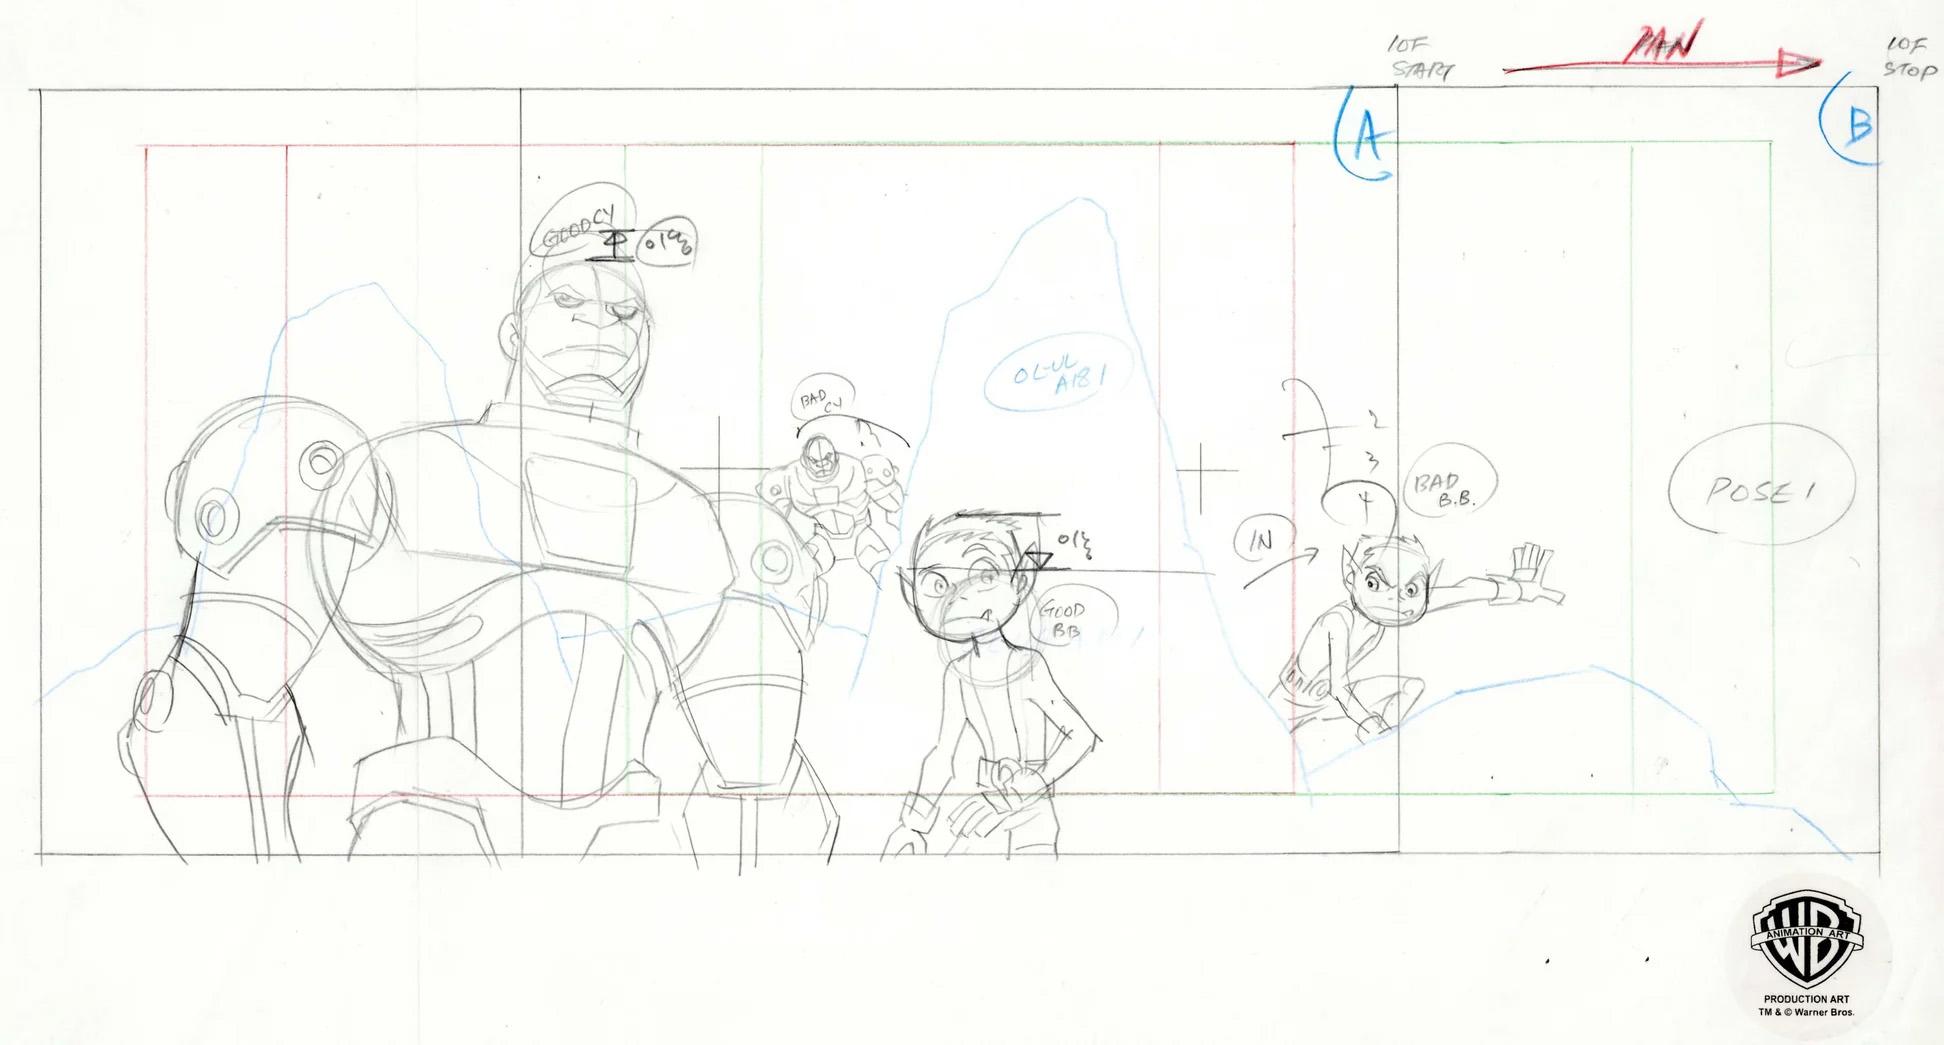 Teen Titans Original Production Drawing: Cyborg and Beast Boy - Art by DC Comics Studio Artists